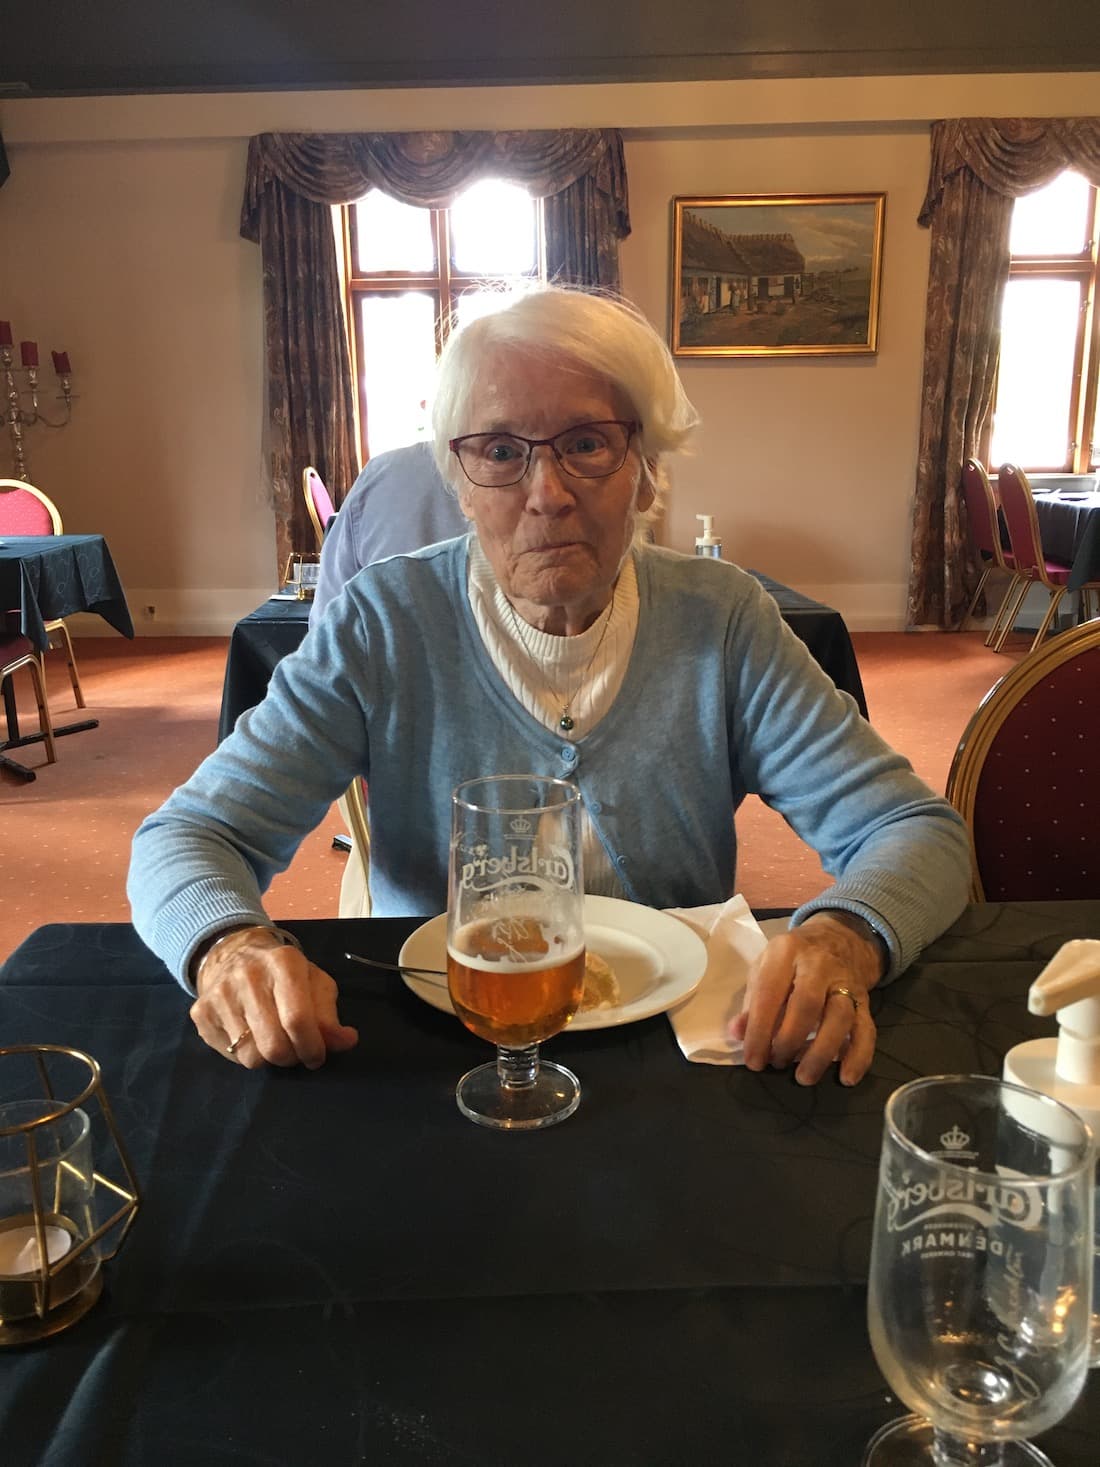 Lunch with my sweet grandma at Lynge Kro